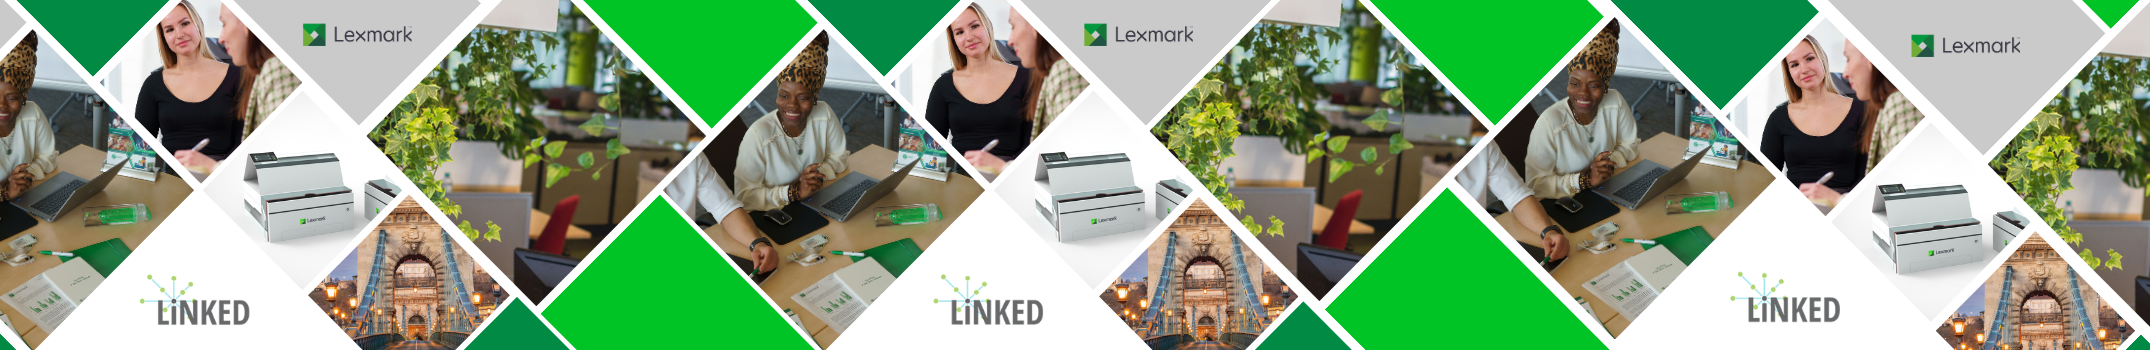 Lexmark banner 2150x350 - LiNKED